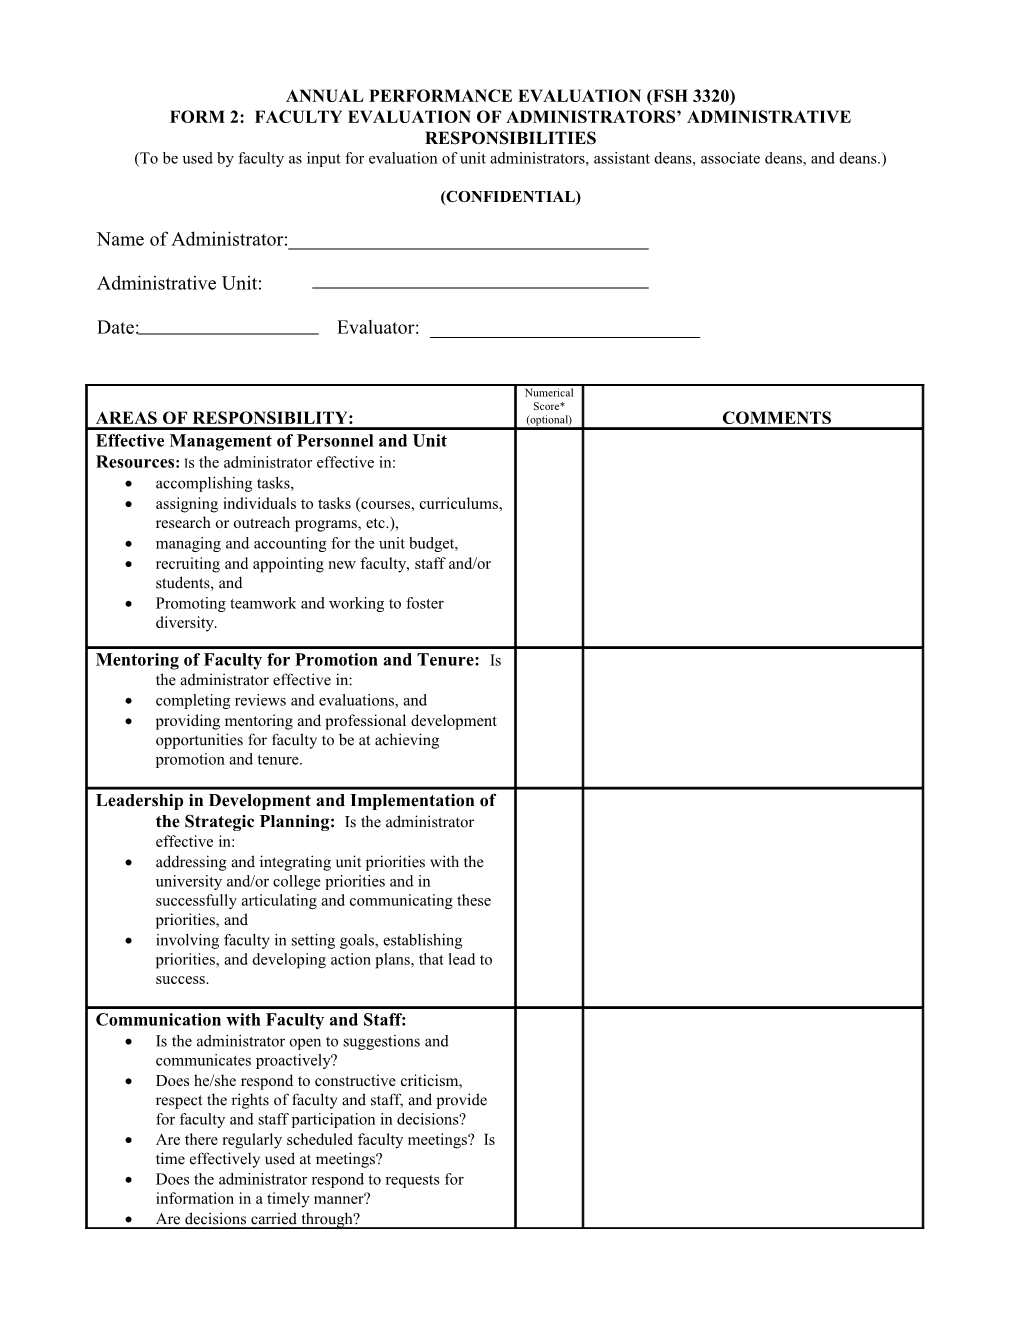 (Form 2B) Faculty Input Form